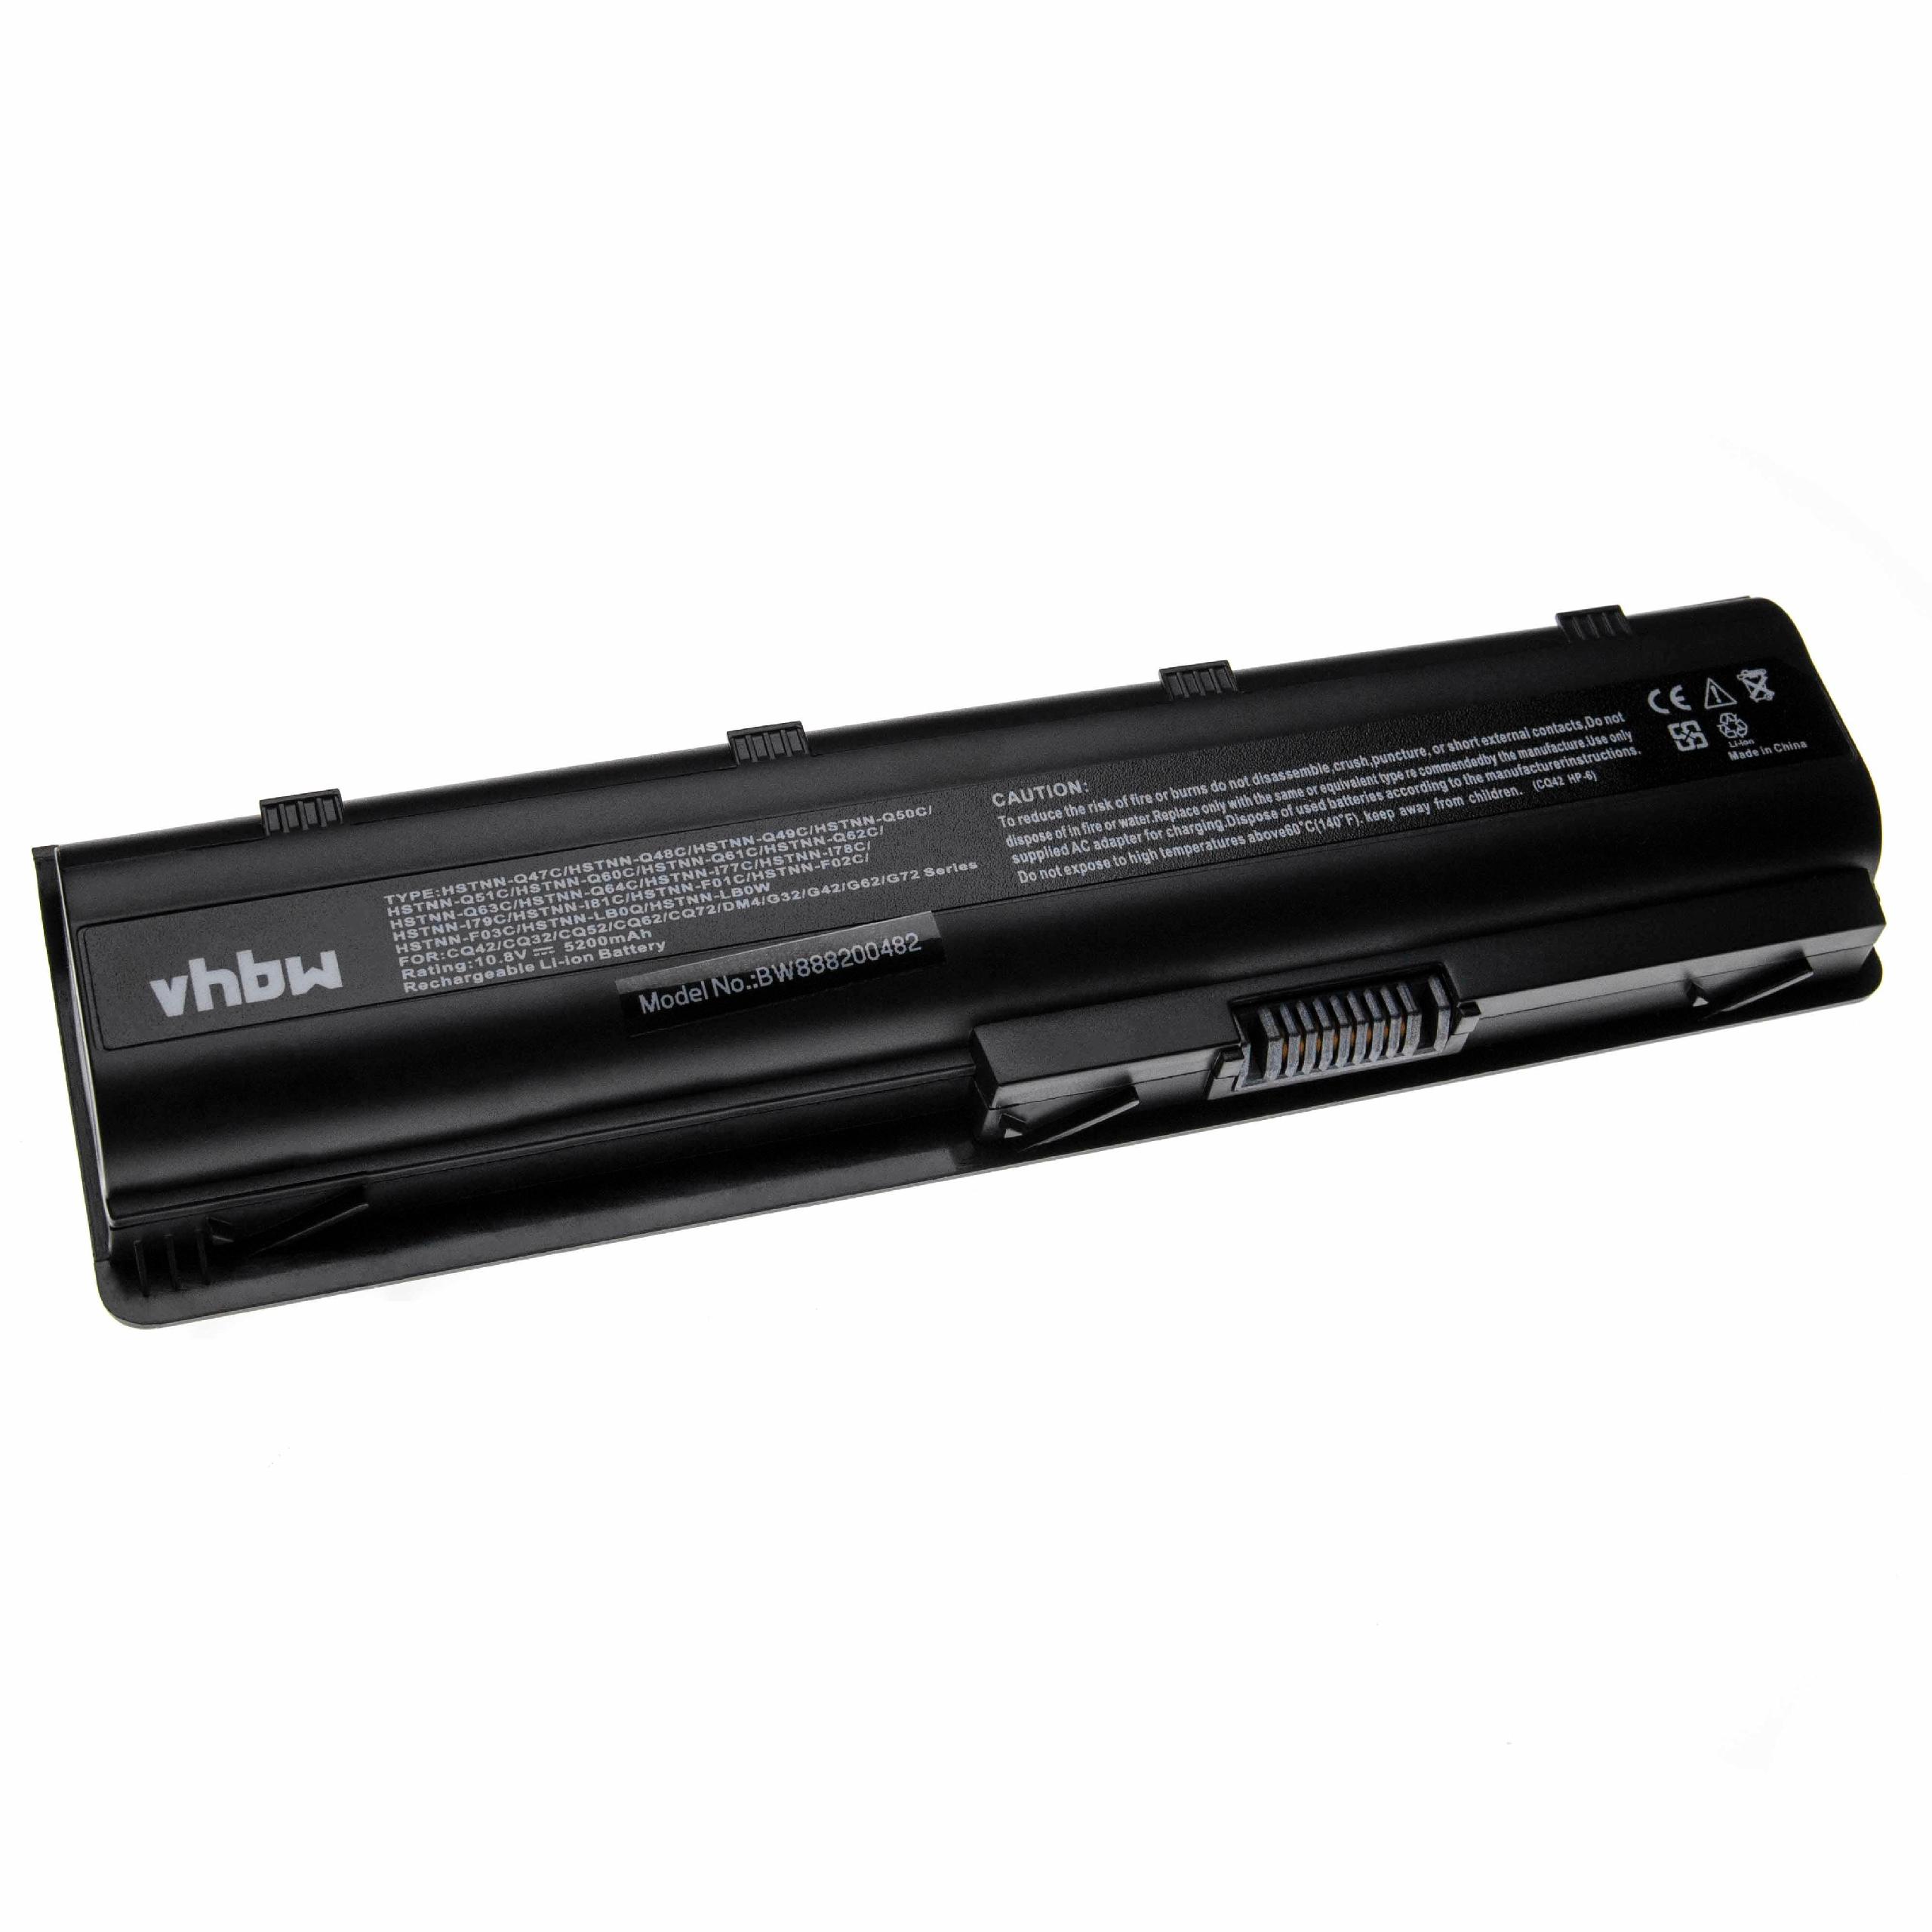 Akumulator do laptopa zamiennik HP / Compaq 586006-361, 586006-321 - 5200 mAh 10,8 V Li-Ion, czarny